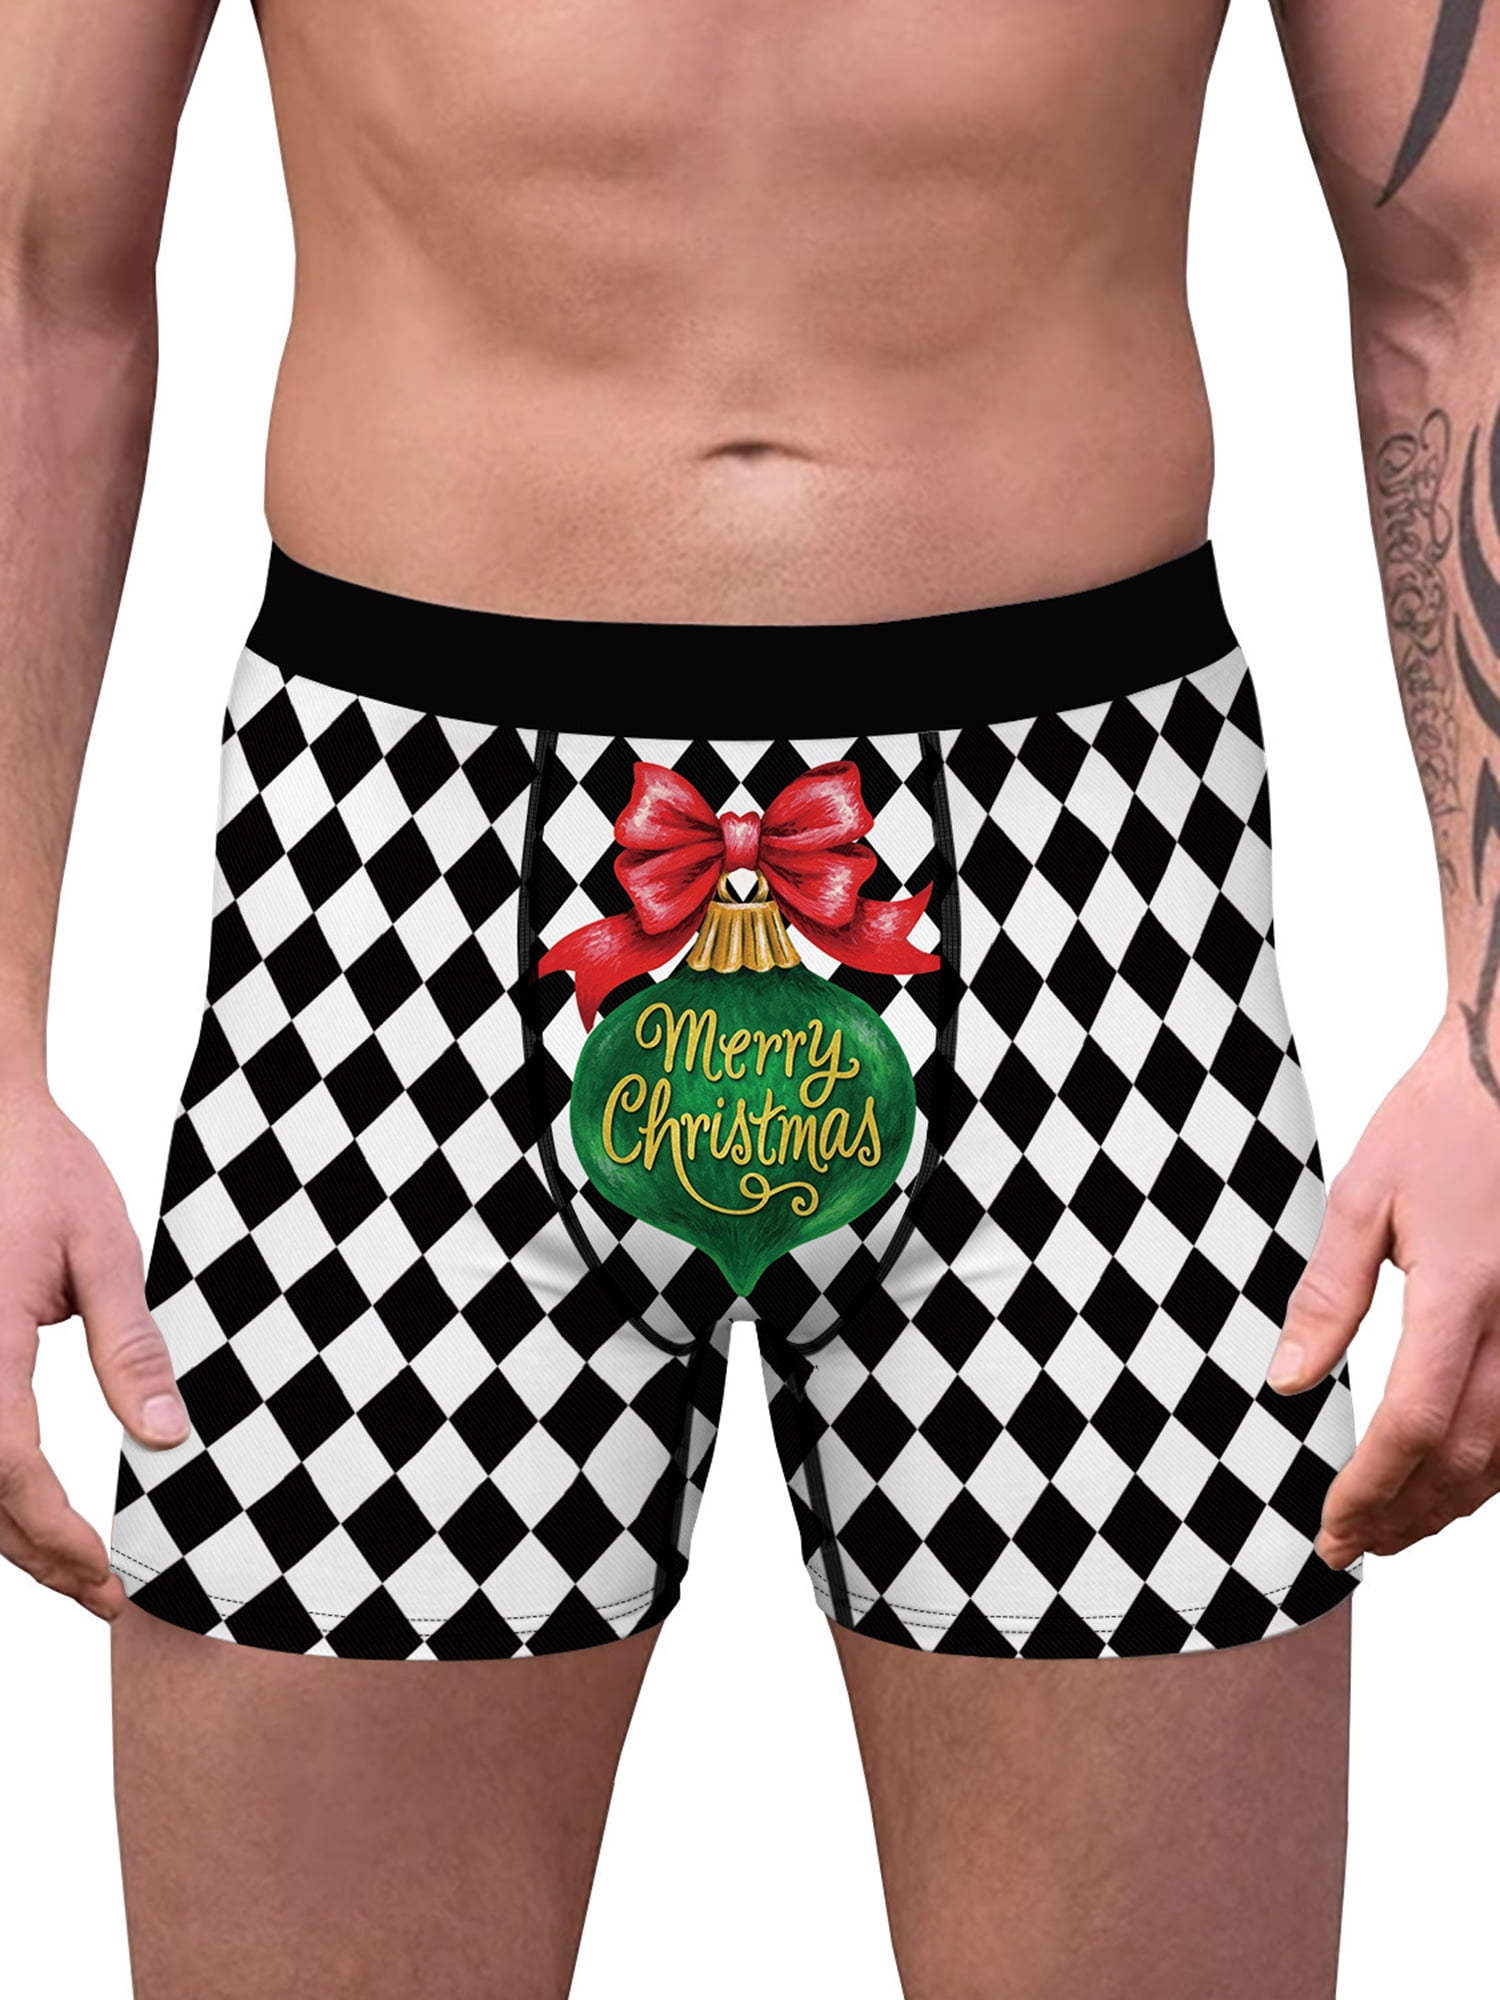 Gift SET of Mens linen underwear, Boxer shorts, Summer shorts